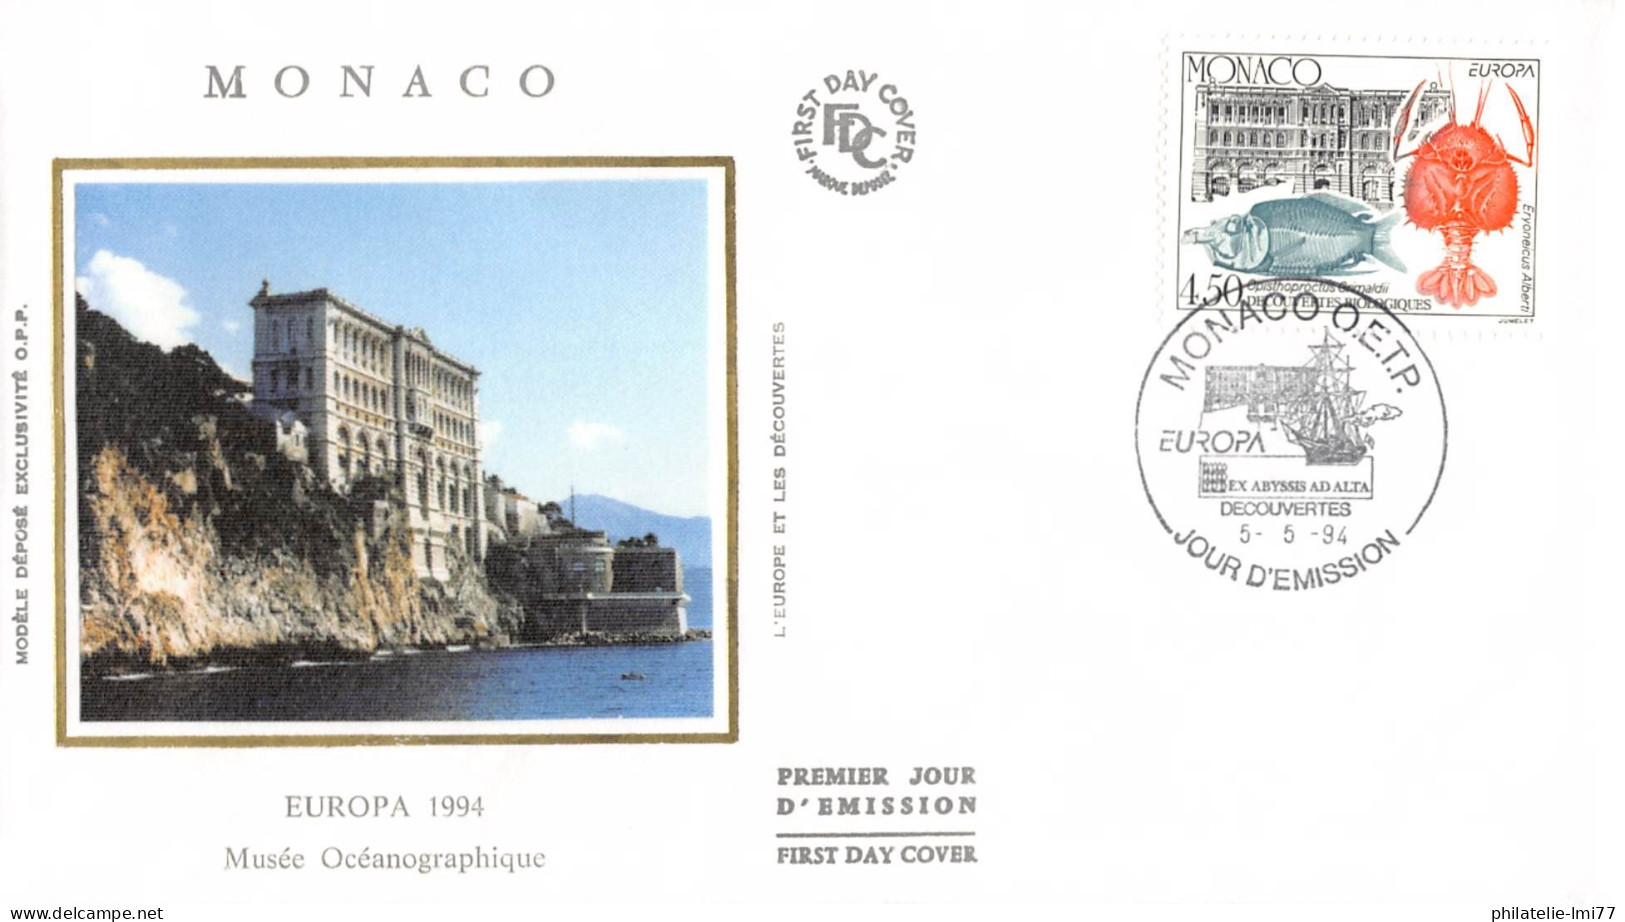 Monaco - FDC Europa 1994 - 1994